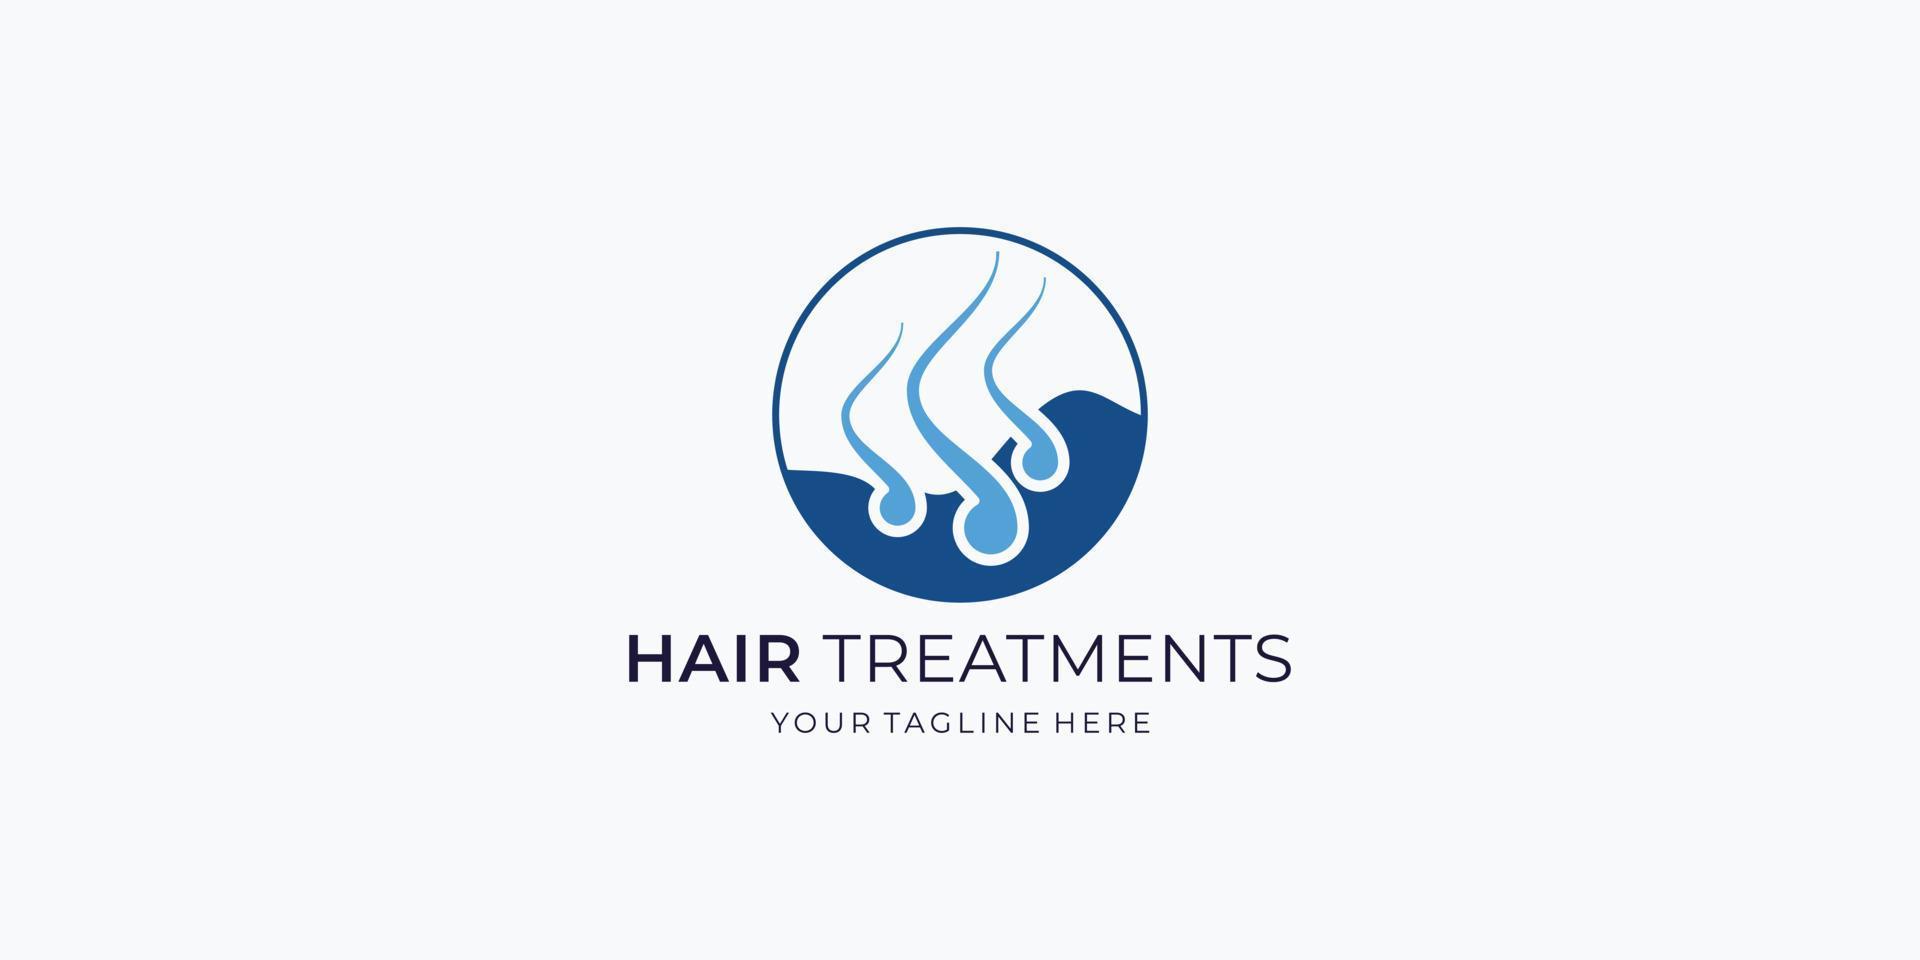 hair treatments logo design. detail illustration isolated on white background vector